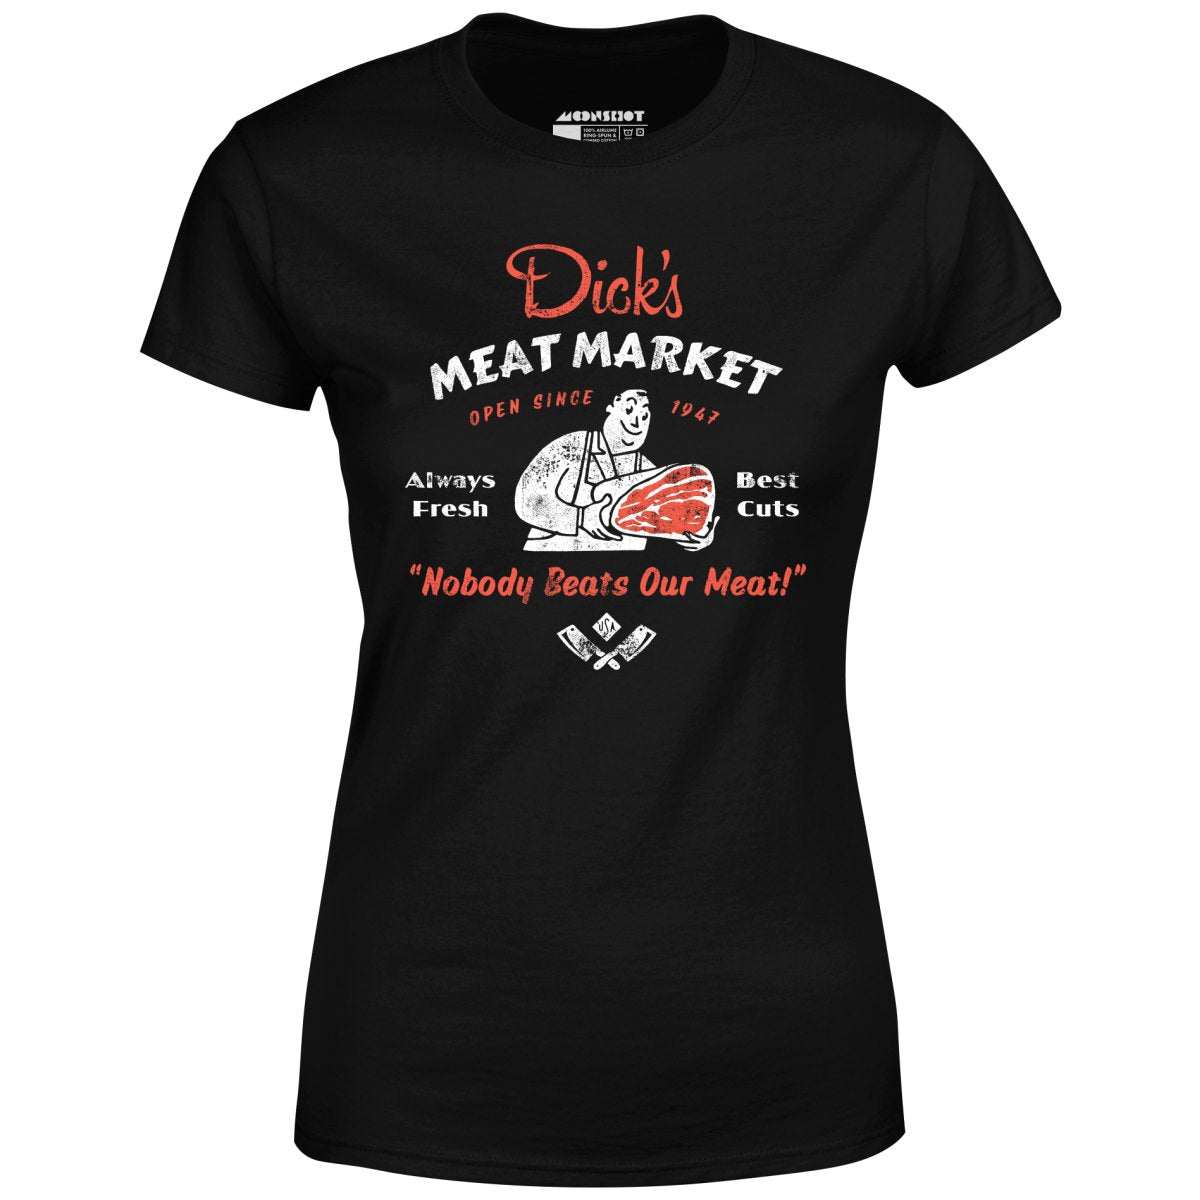 Dick's Meat Market - Women's T-Shirt